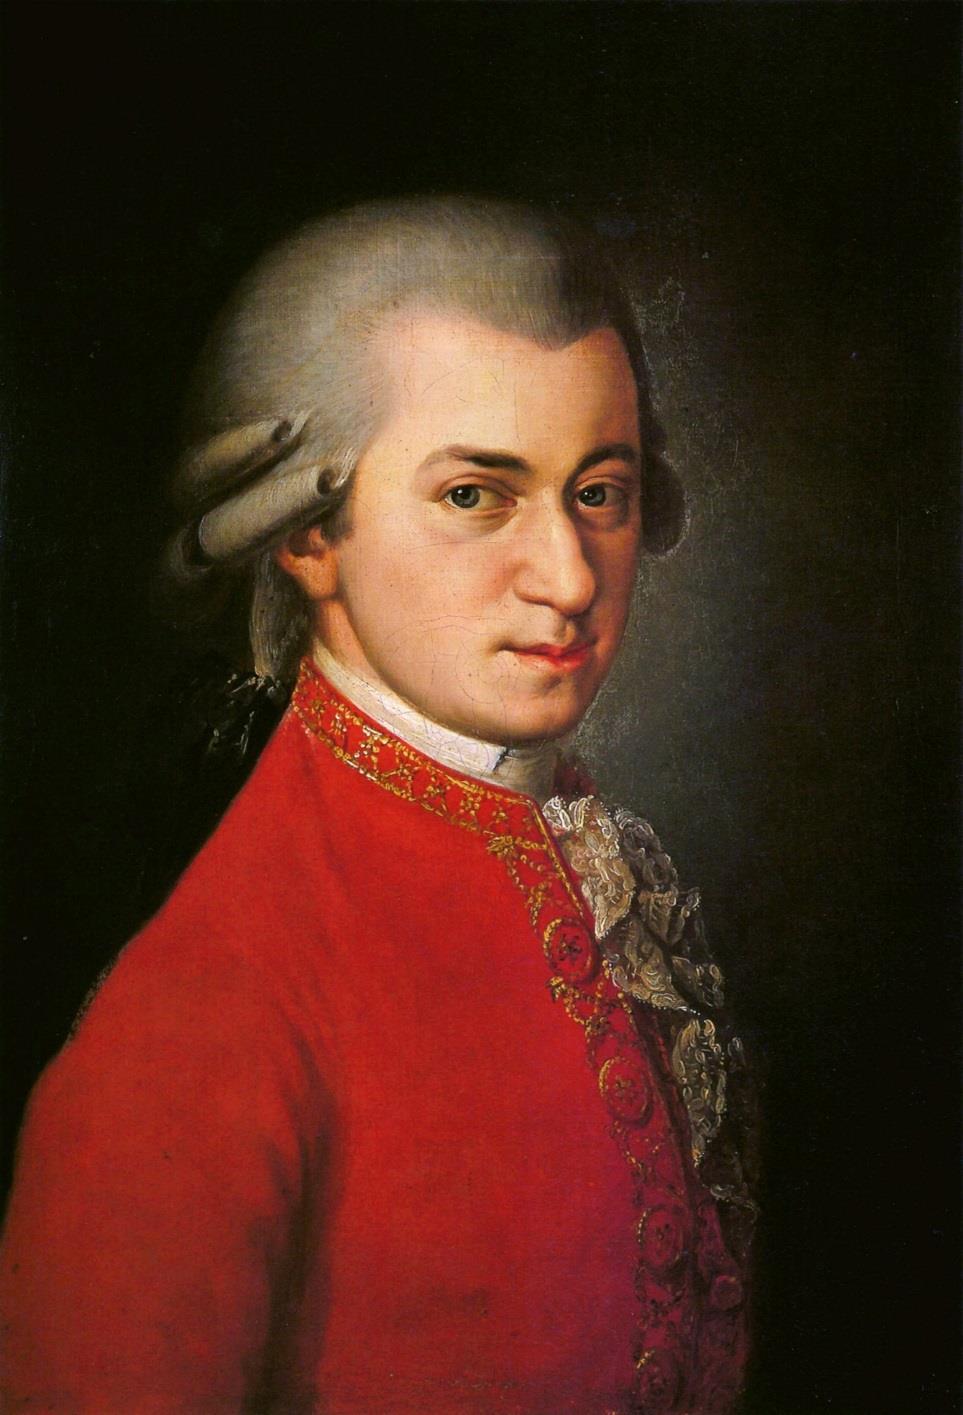 ROMANTICISM Mozart s Symphony #40, 1788 http://www.youtu be.com/watch?